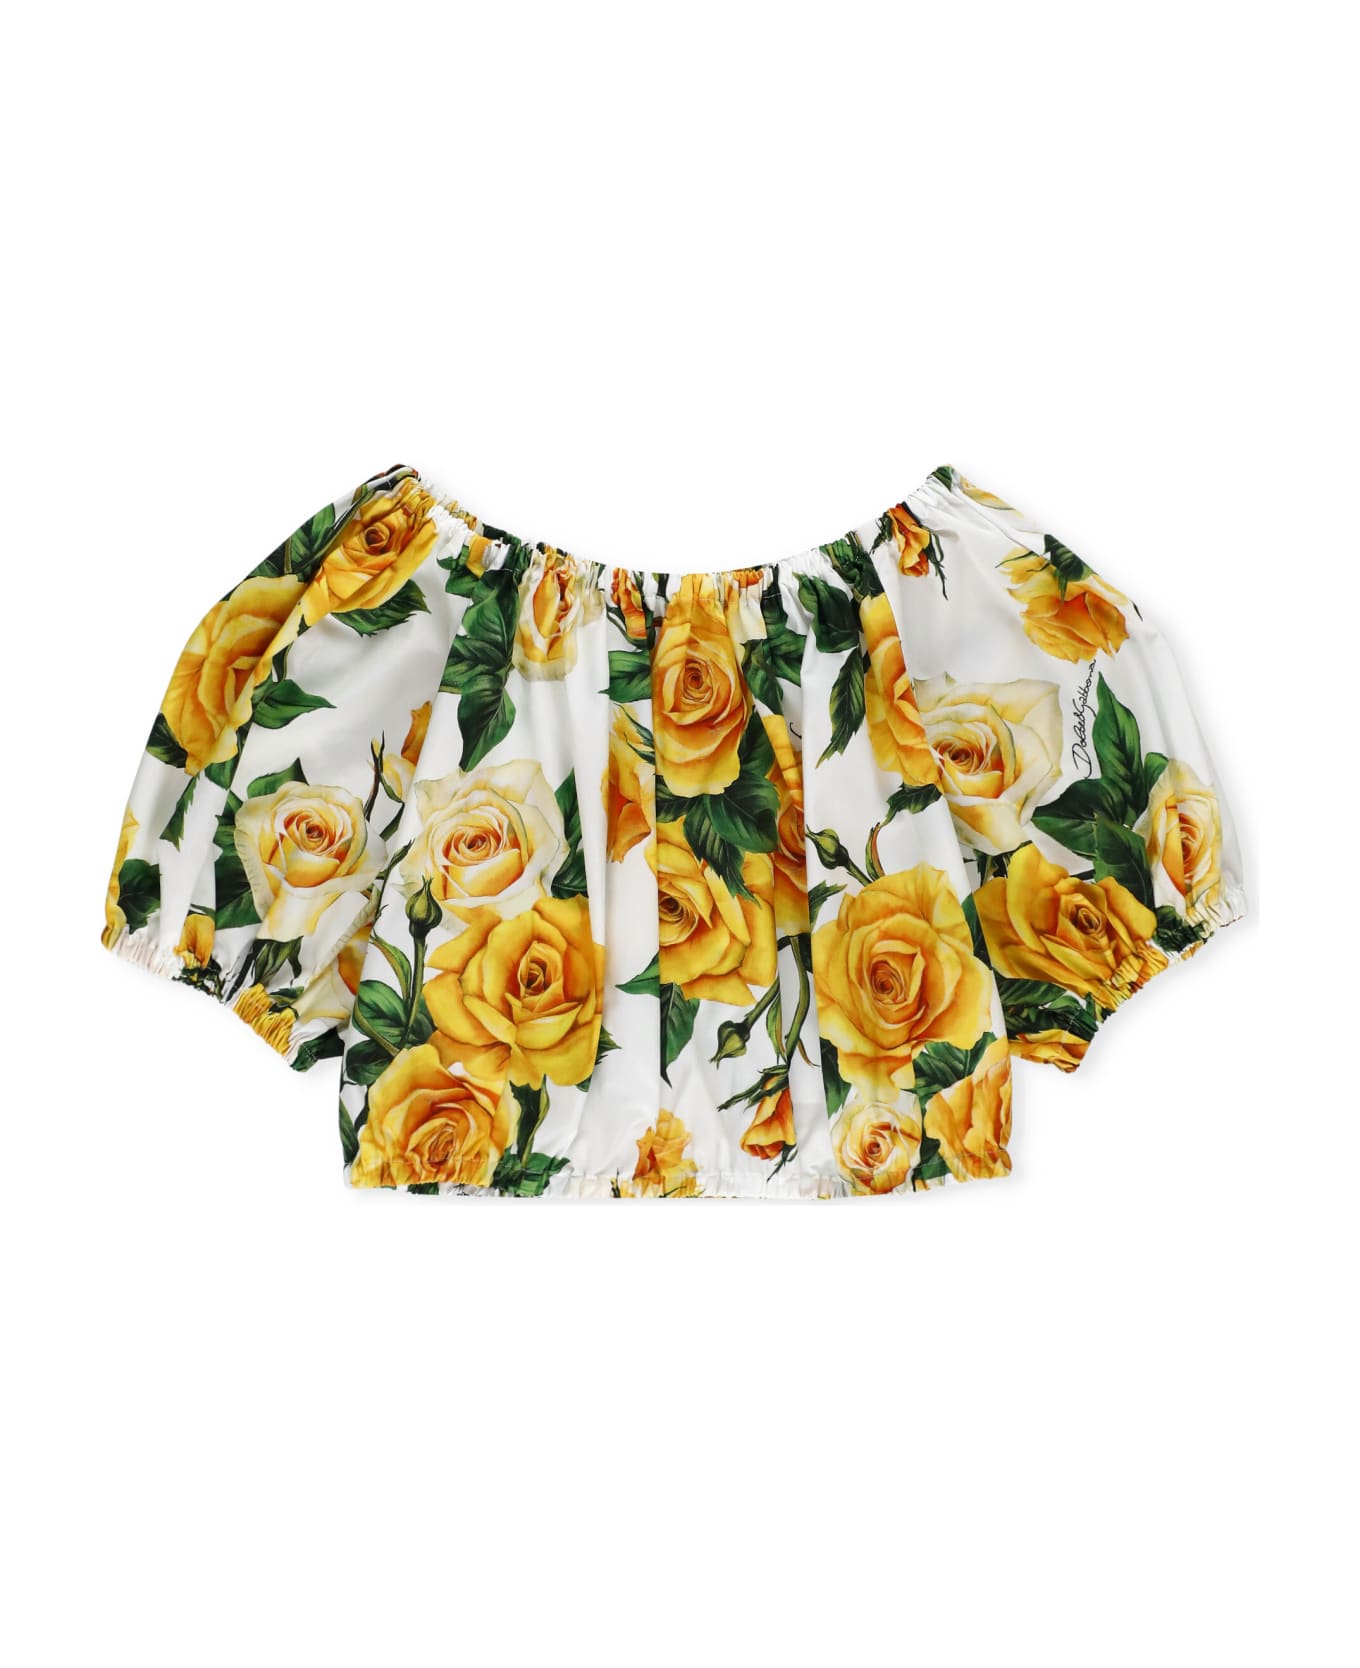 Dolce & Gabbana Flowering Blouse - Multicolore シャツ